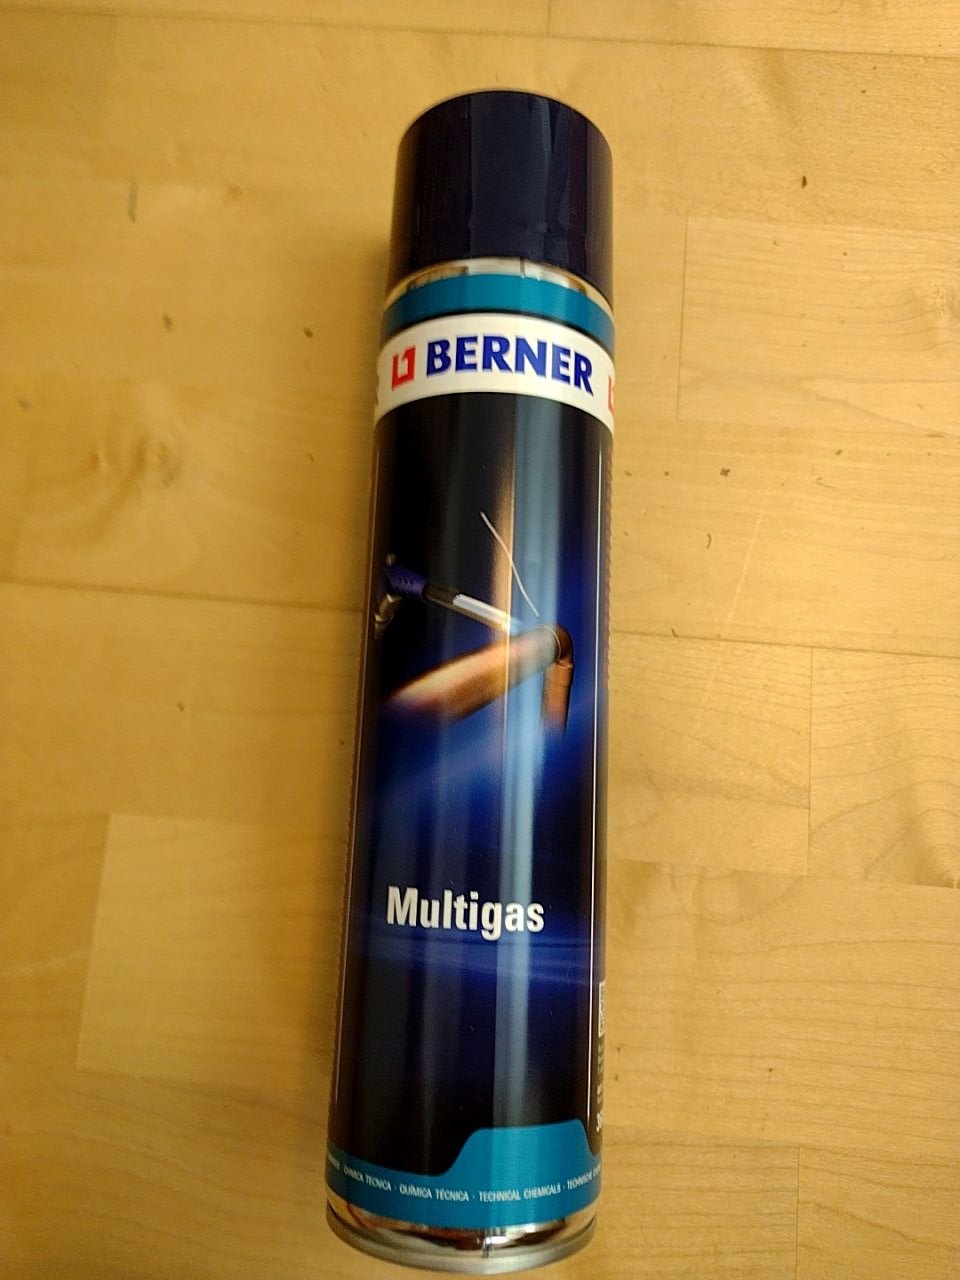 Plynová kartuše Multigas Berner 12 ks x 360ml